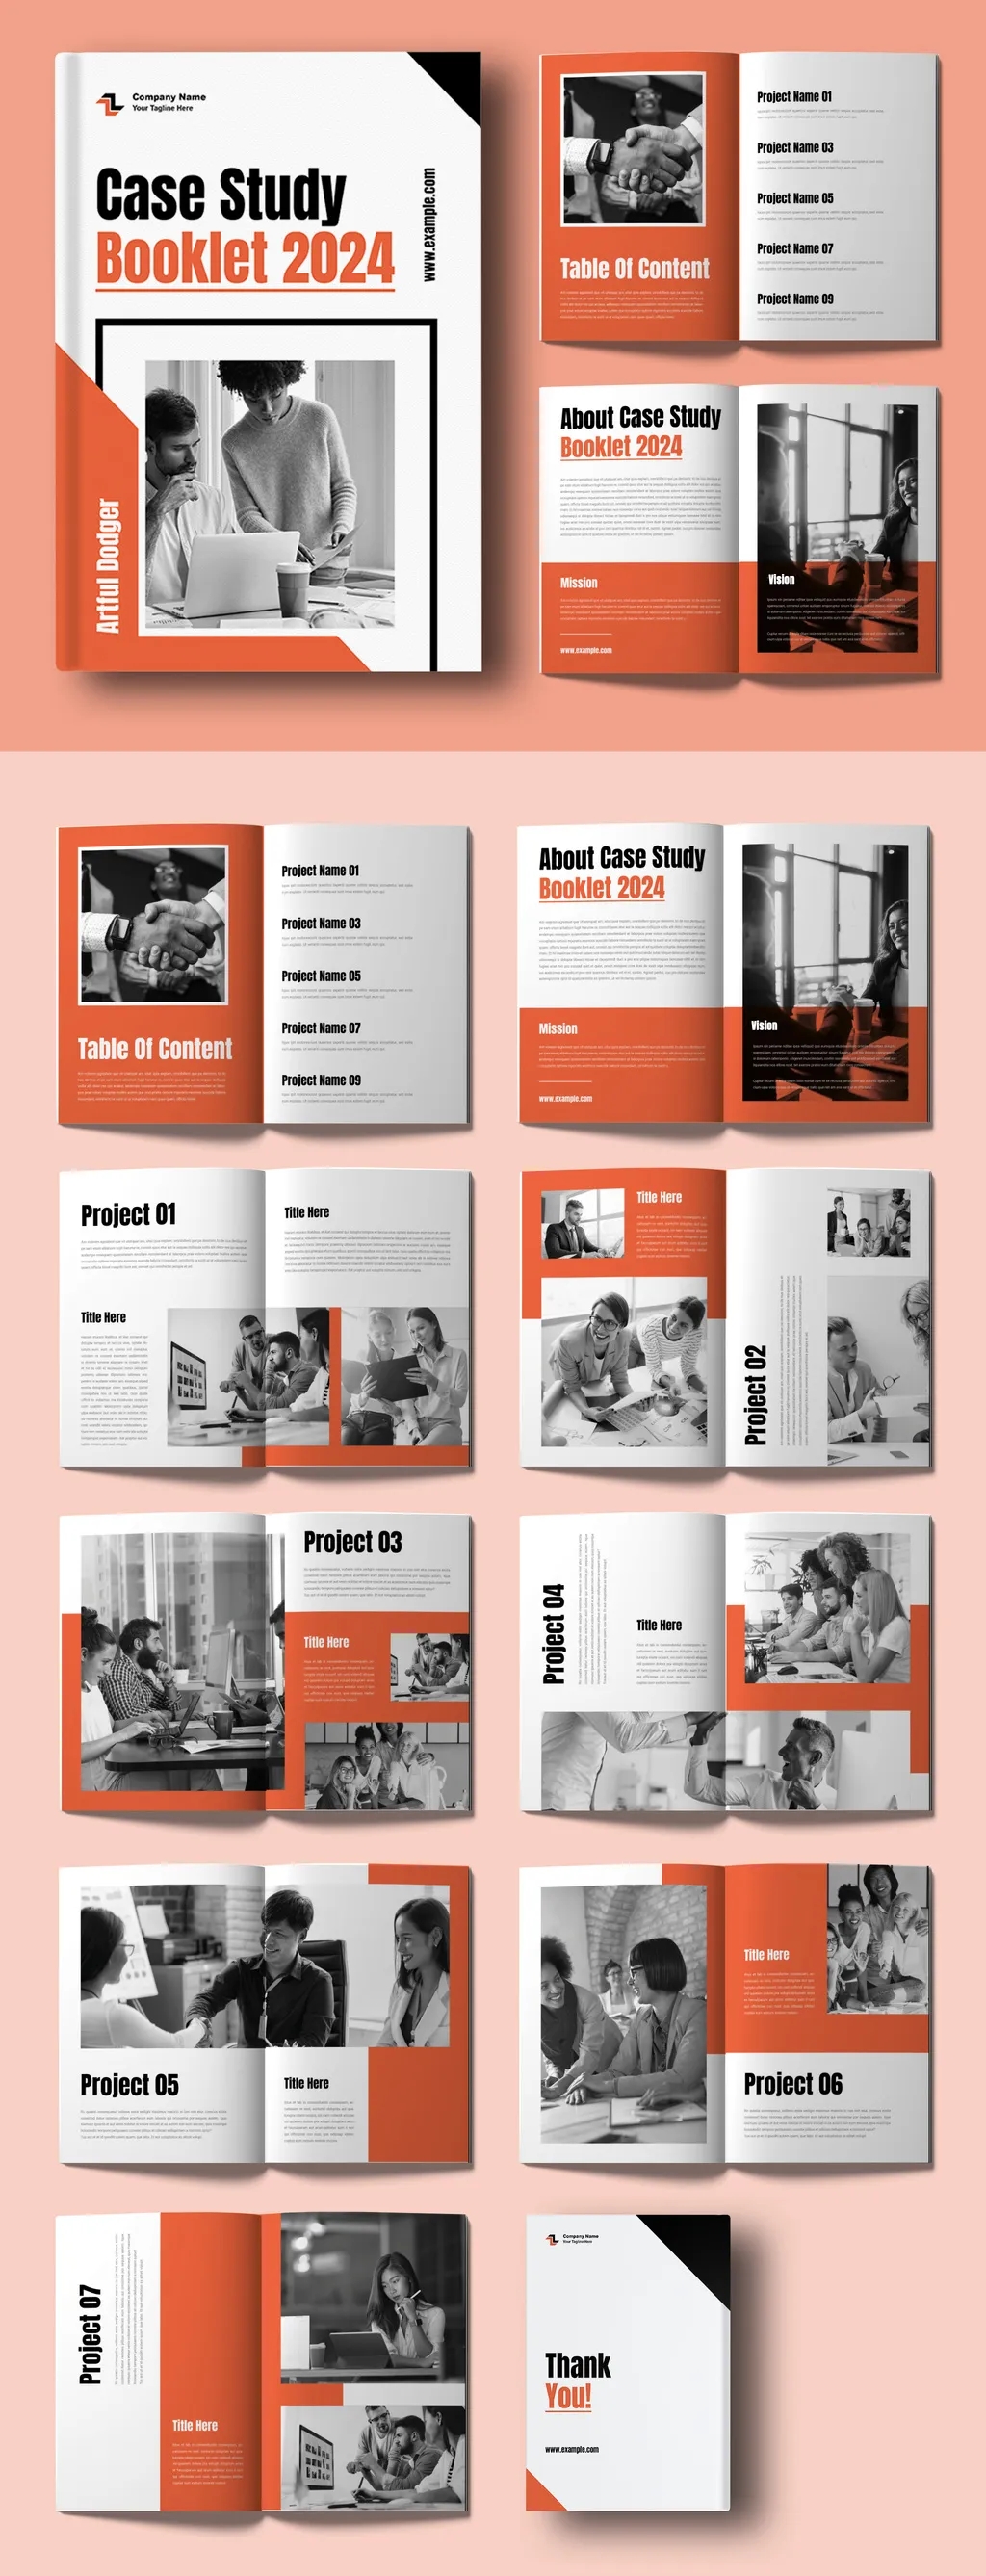 Adobestock - Case Study Booklet Layout 723806327